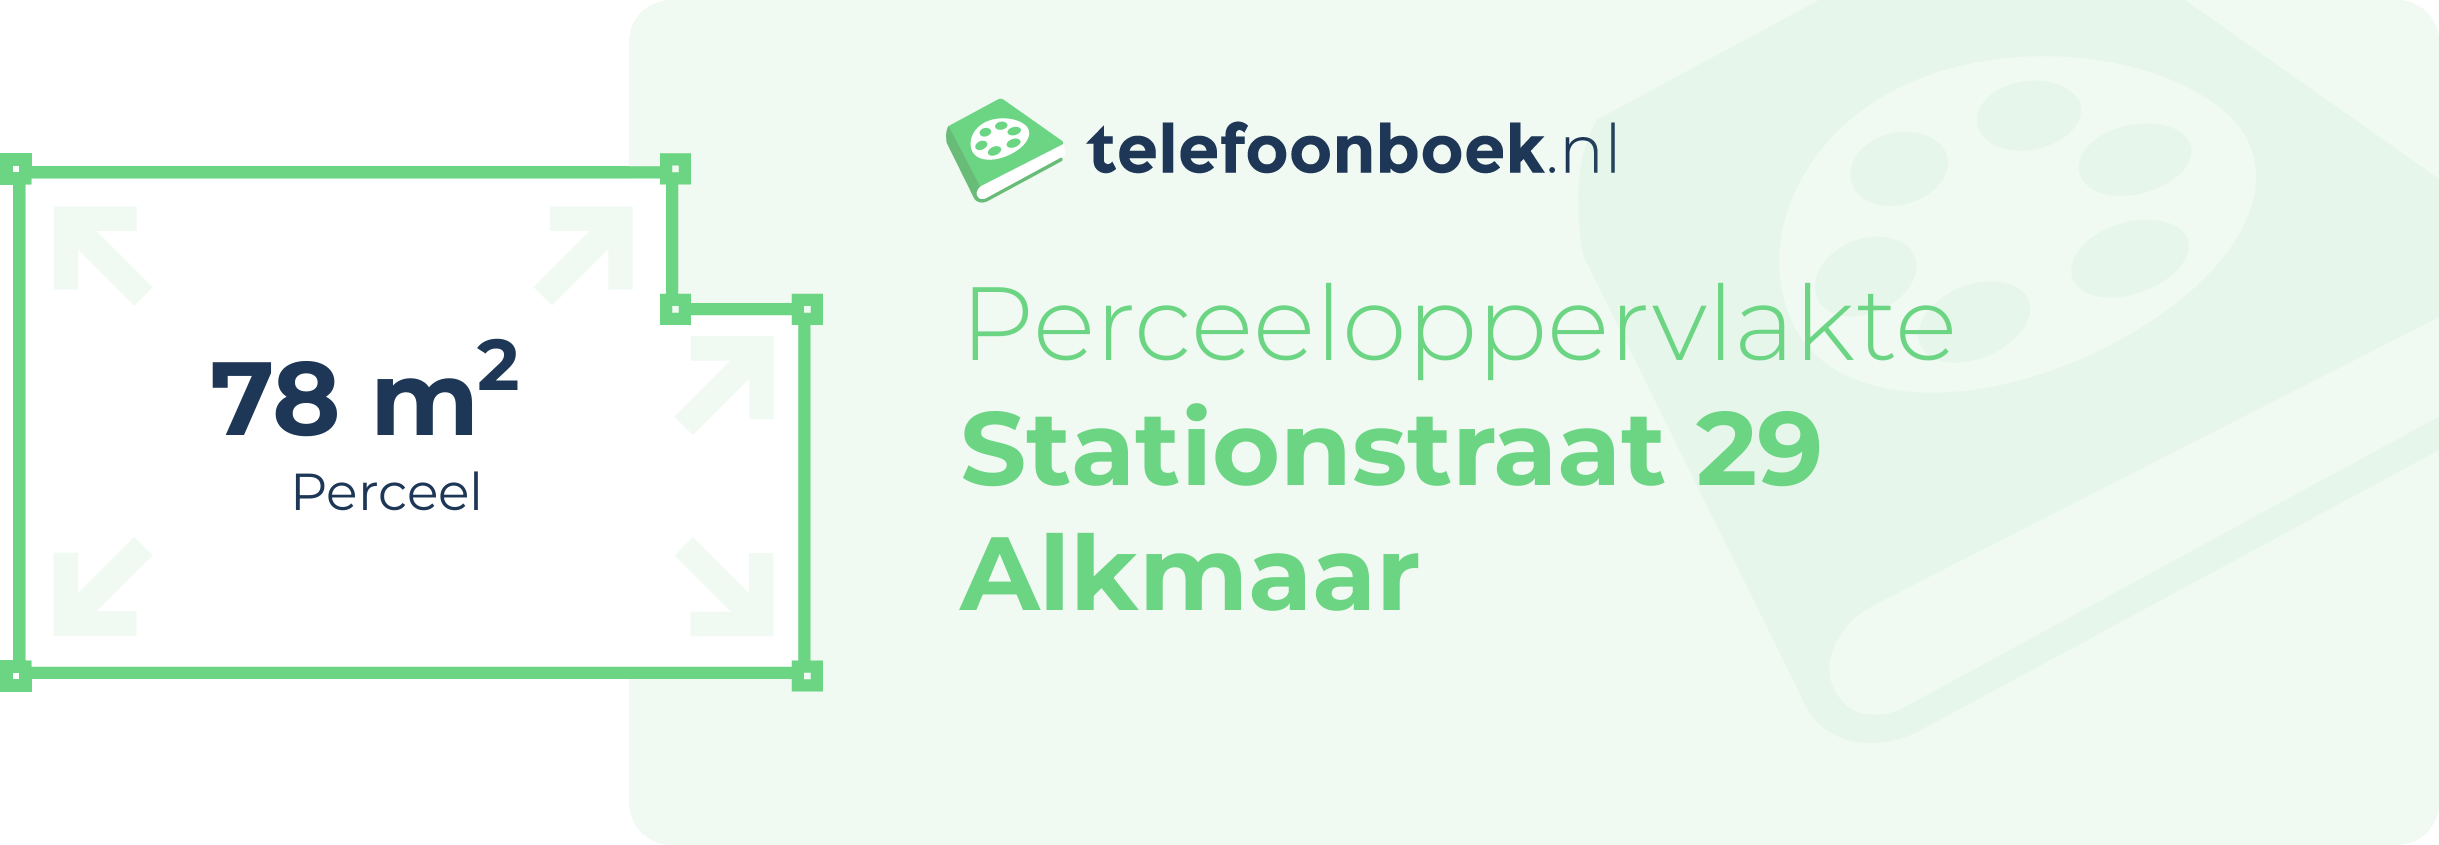 Perceeloppervlakte Stationstraat 29 Alkmaar